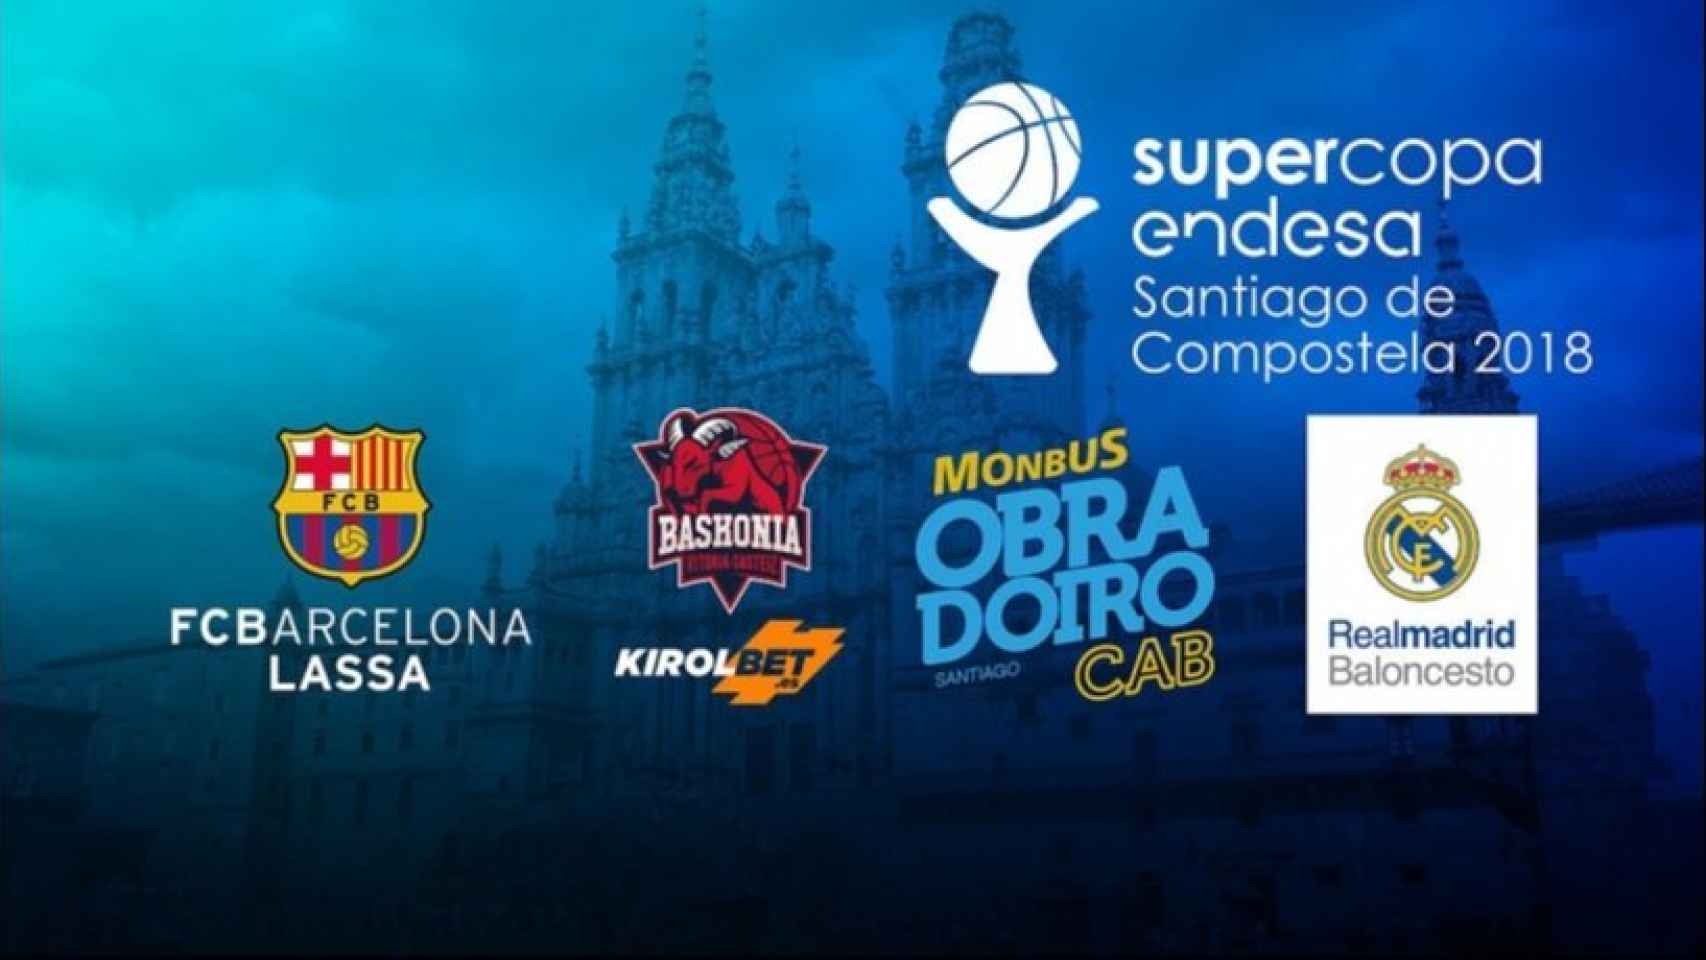 Supercopa Endesa 18-19 (Twitter: @ACBCOM)